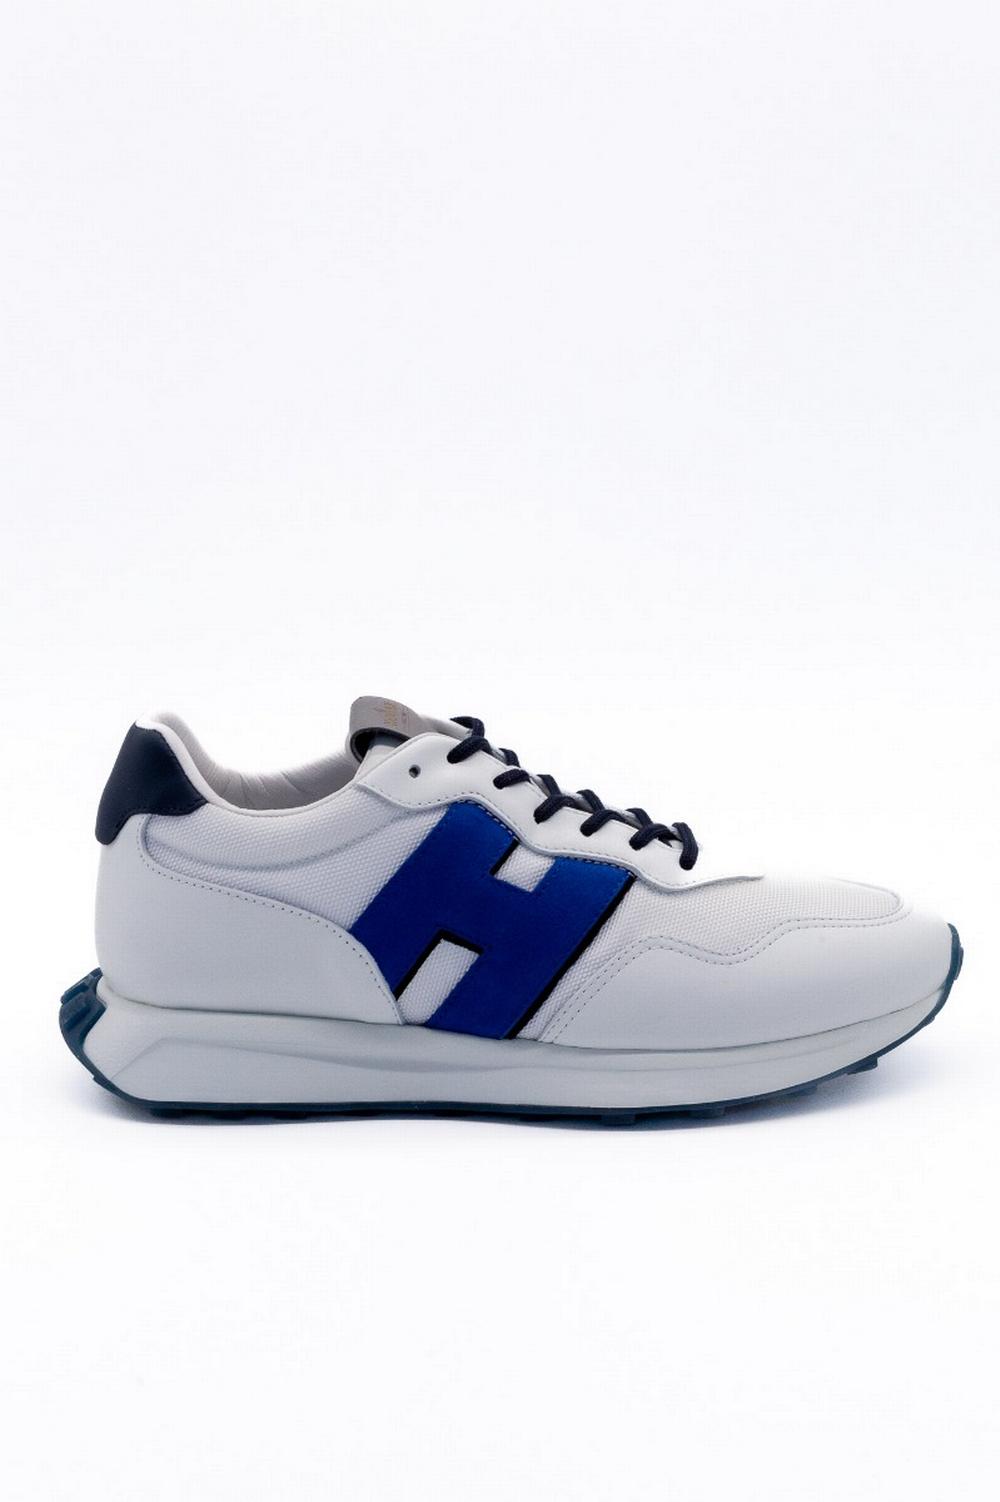 Hogan - Sneaker H601 Bianco/Blu Uomo - HXM6010EH41N1E618J